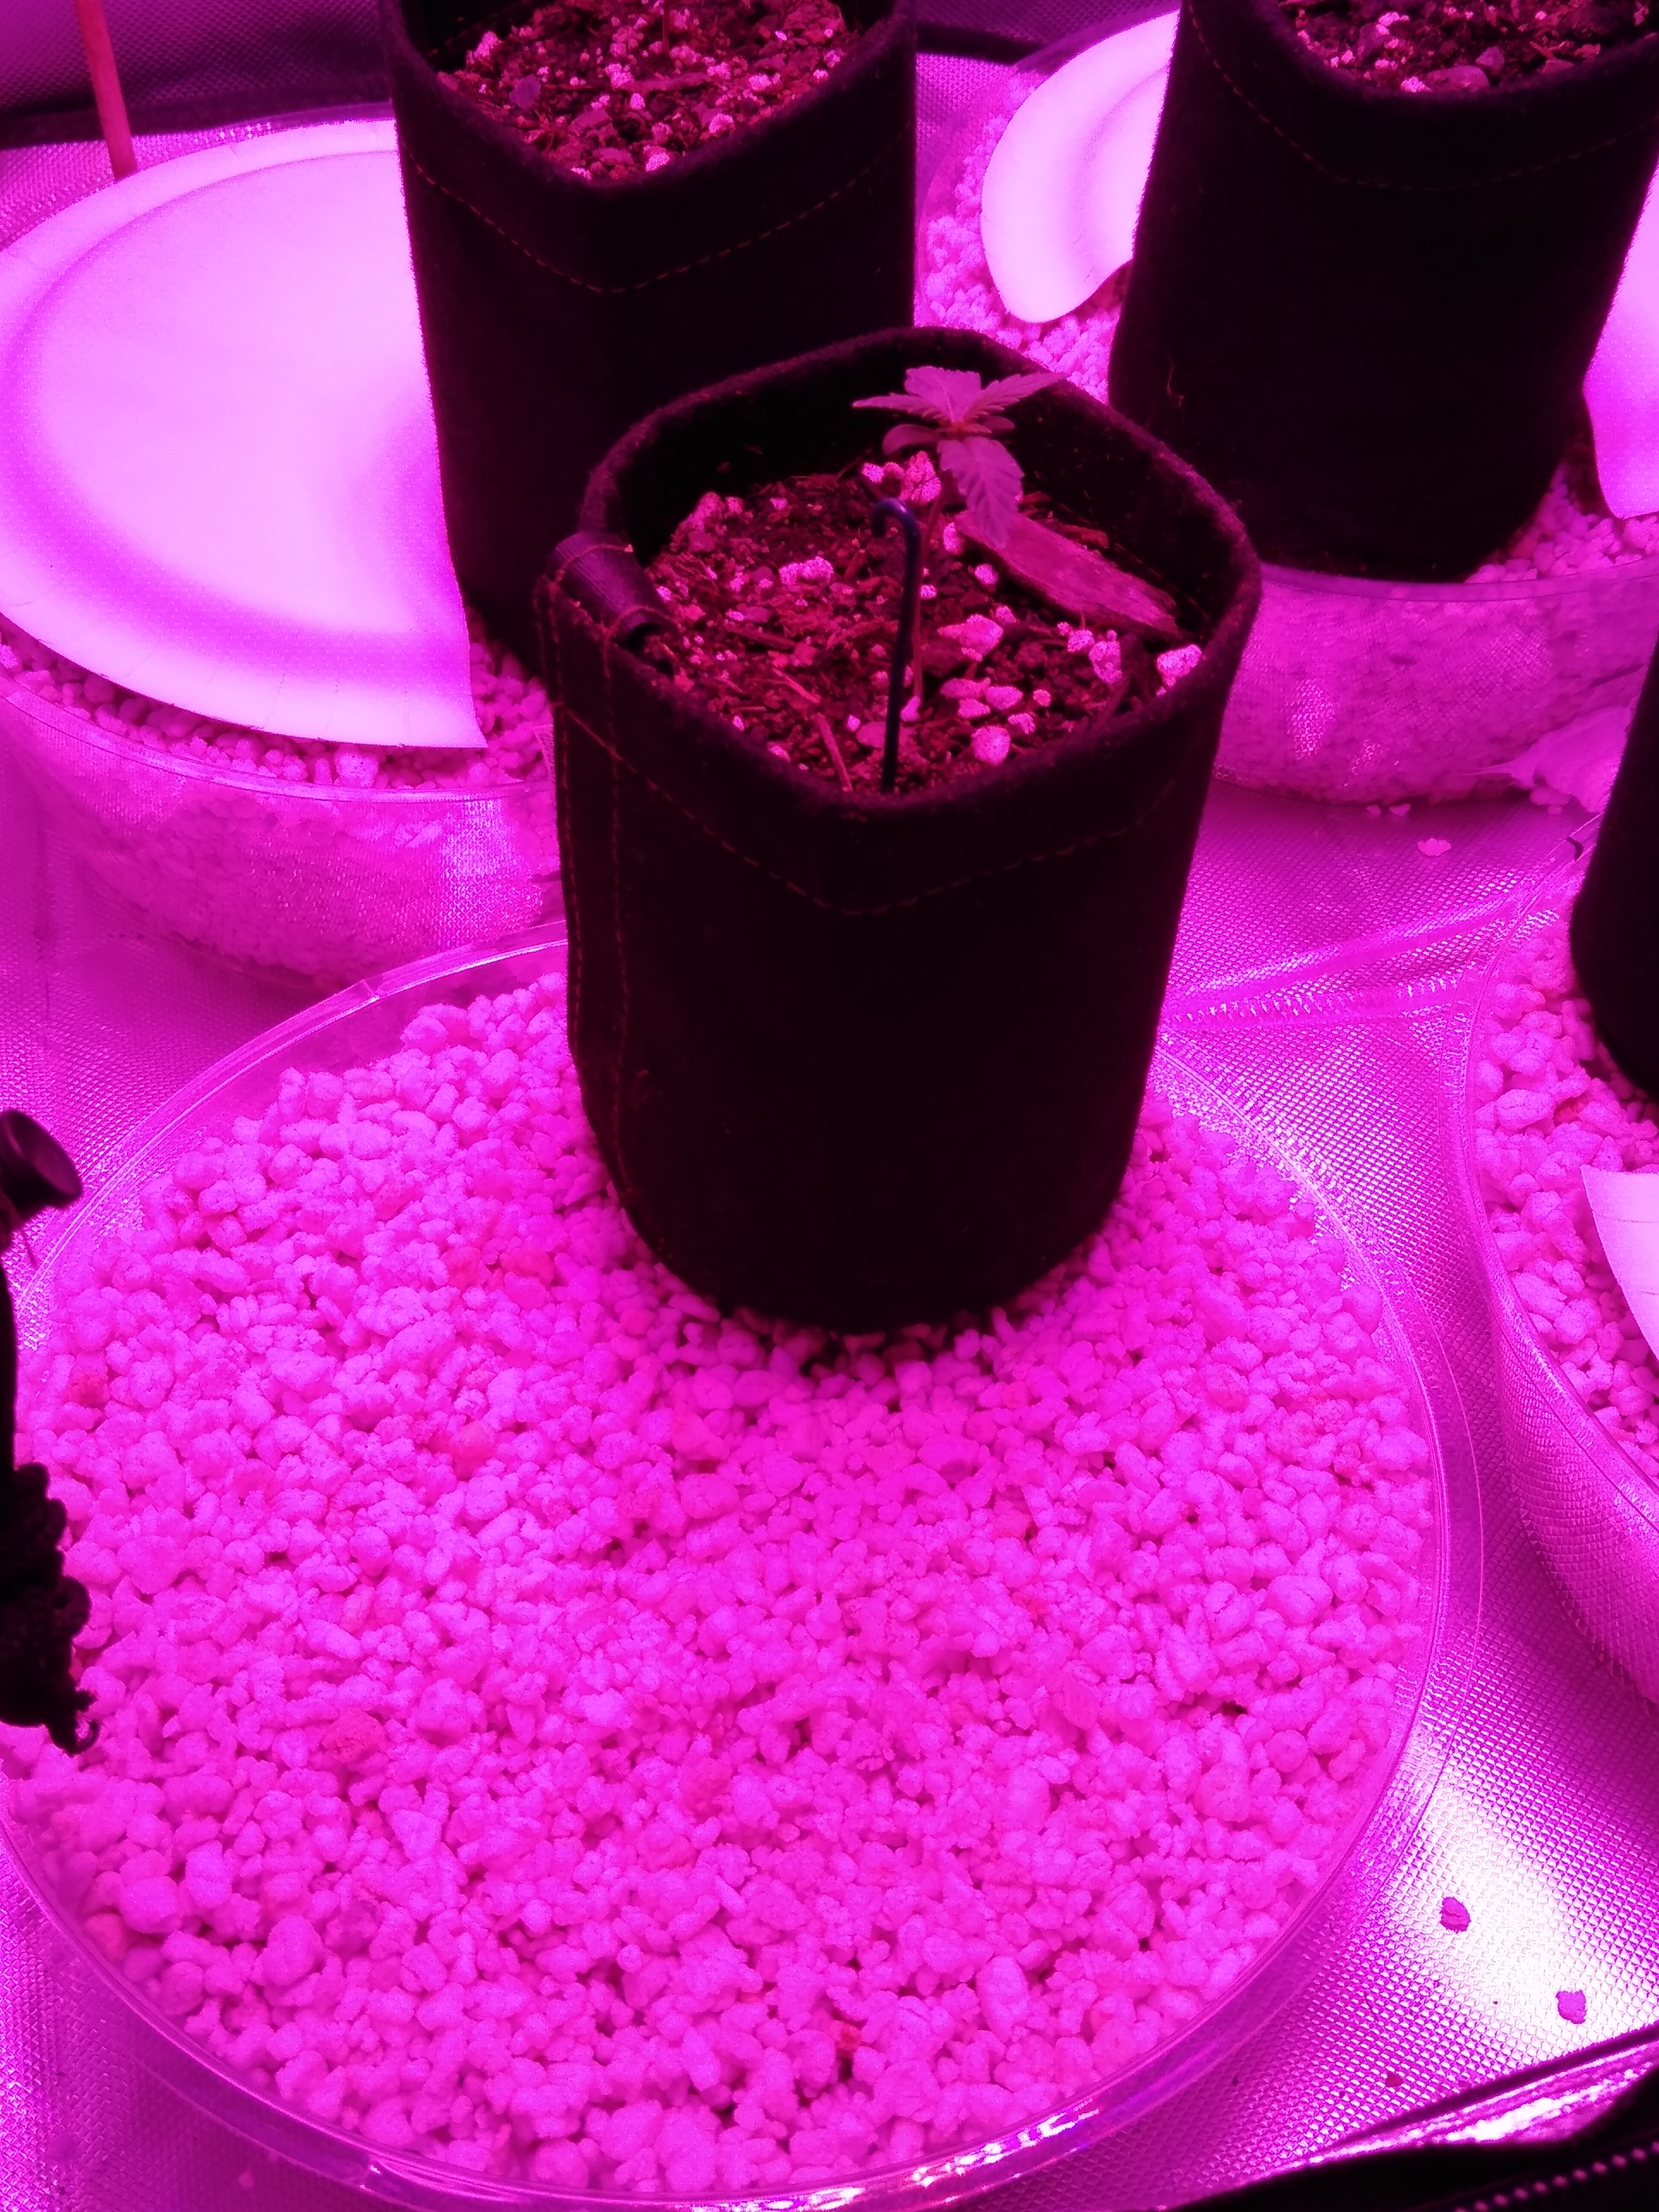 Sub irrigation saucers with fabric pot w/ WW seedling (W1, D7)